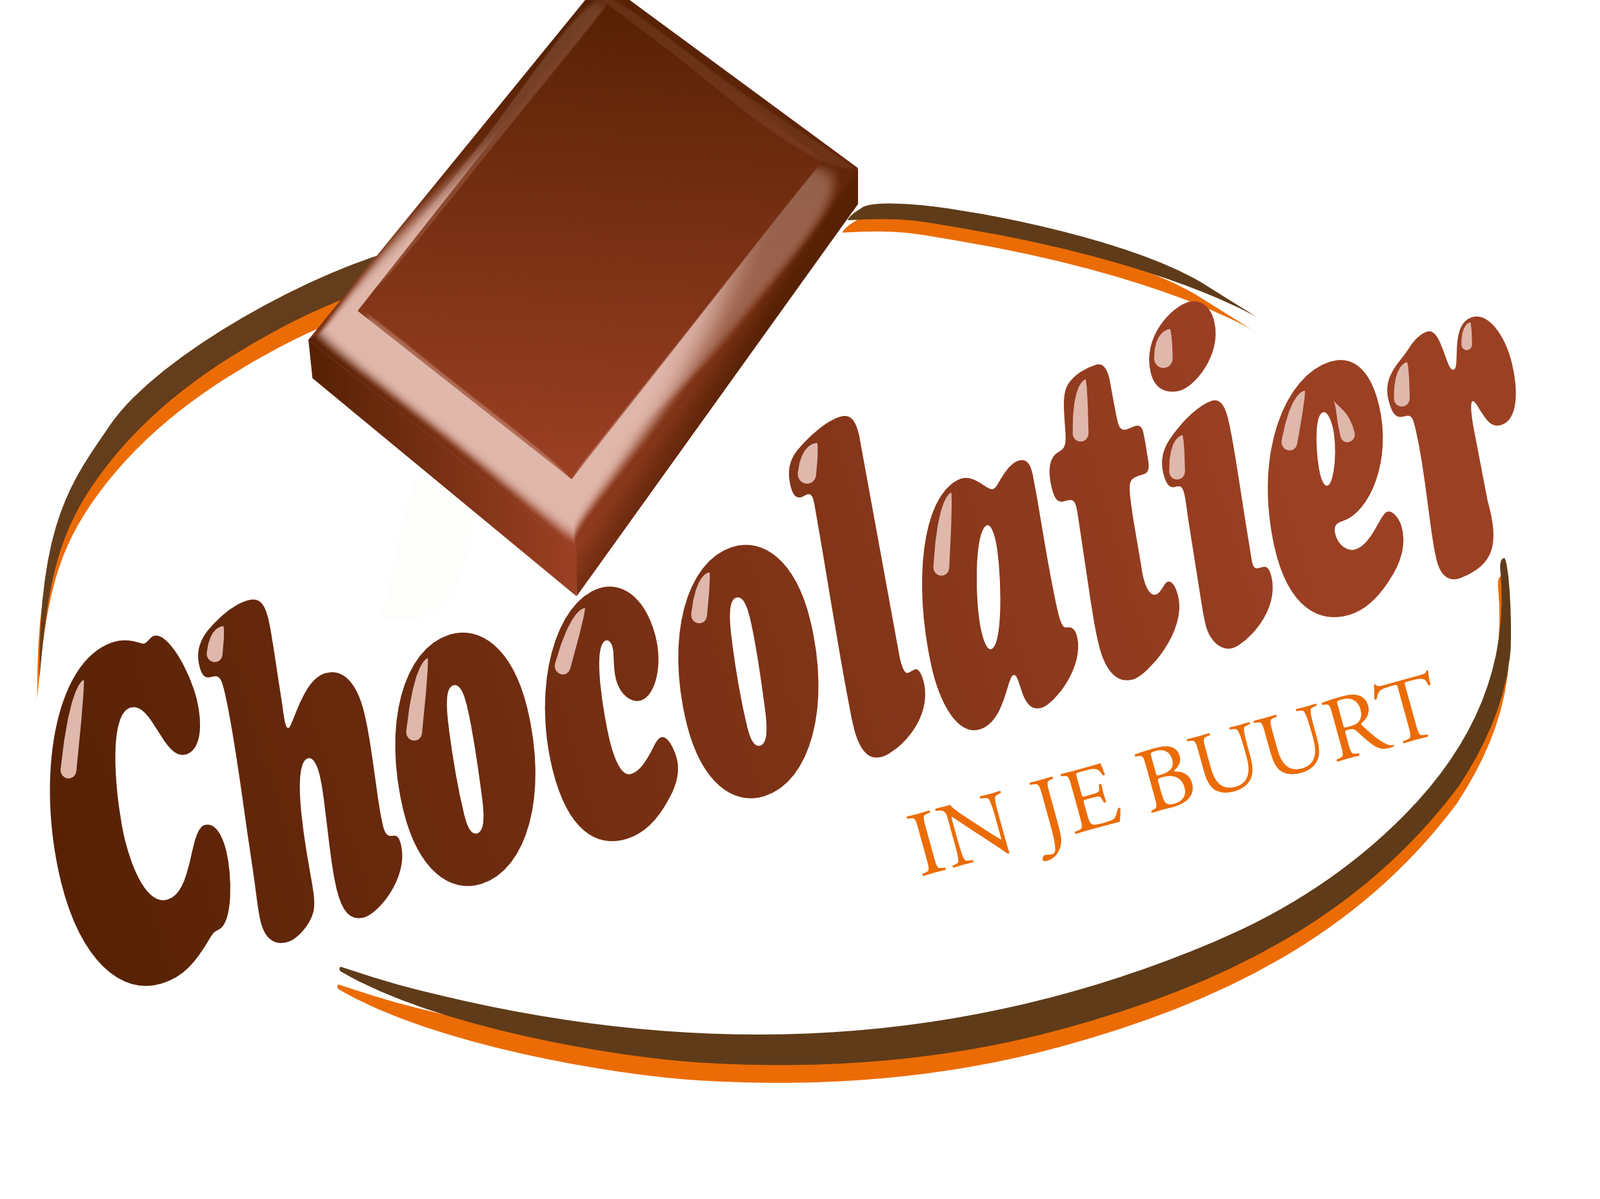 Elegant, Upmarket, Chocolate Company Logo Design for Artisanale Chocolate  by Wala | Design #7680097